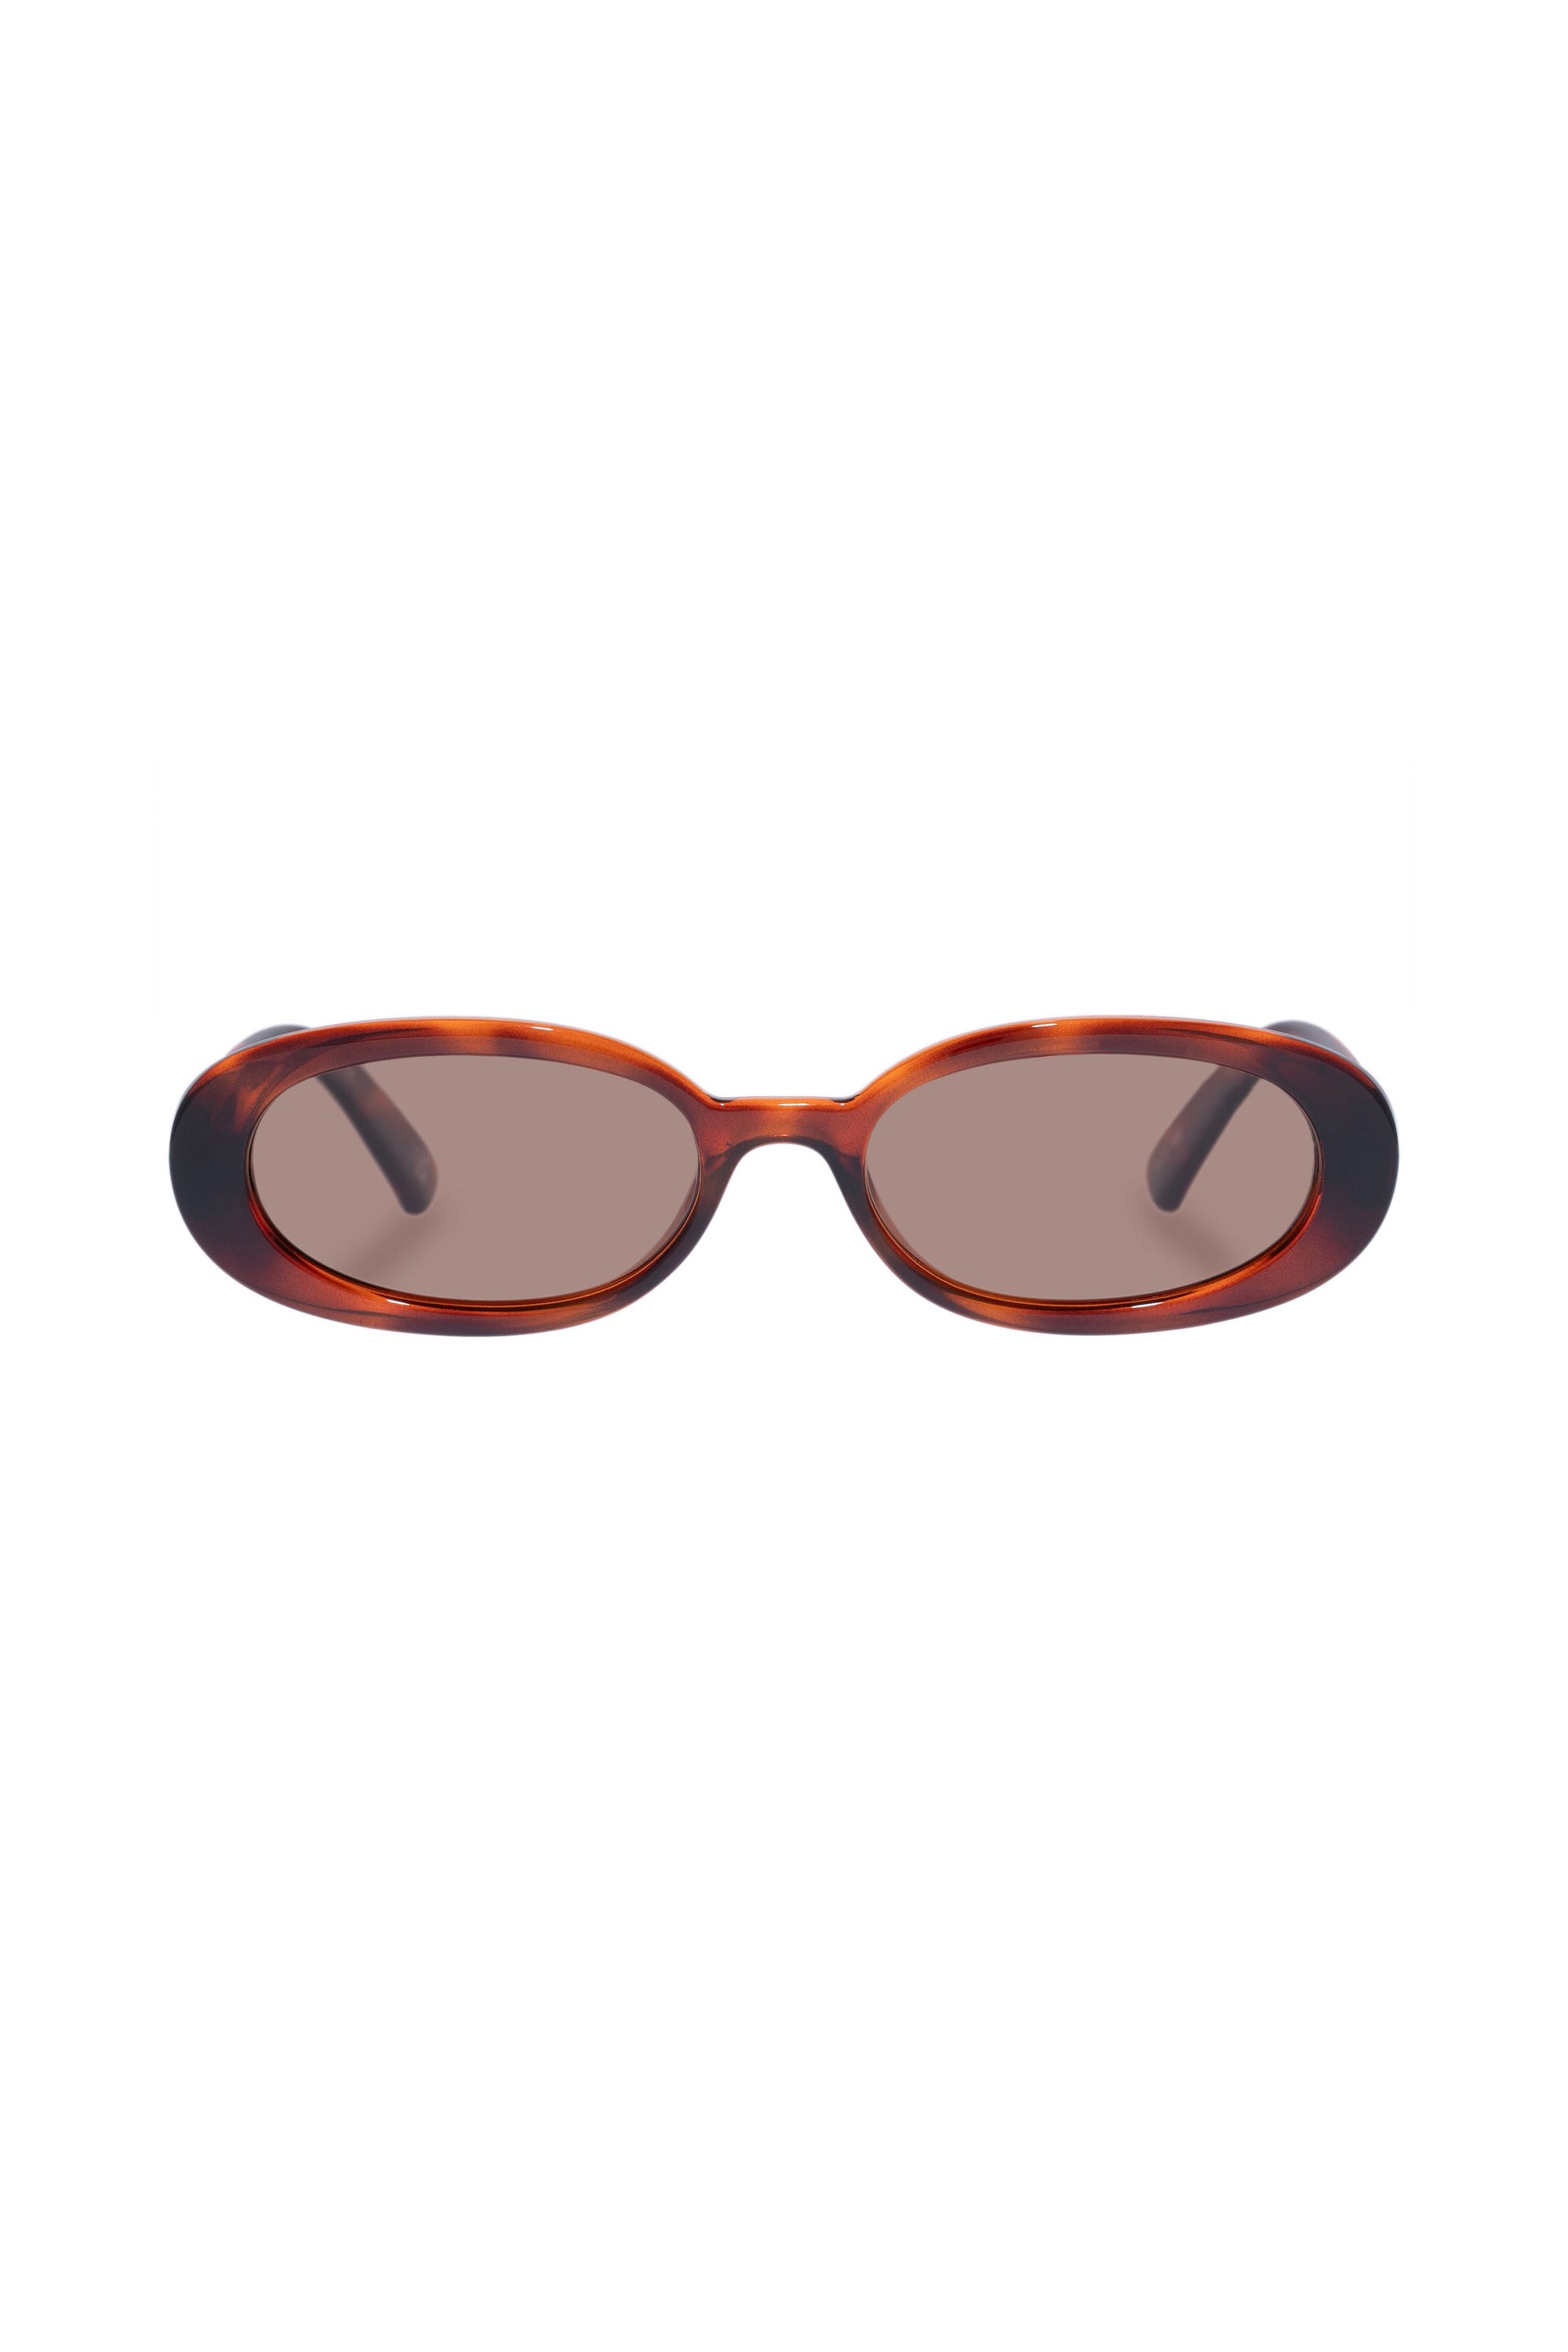 Le Specs Outta Love Sunglasses - Toffee Tort *Polarized* - RUM Amsterdam